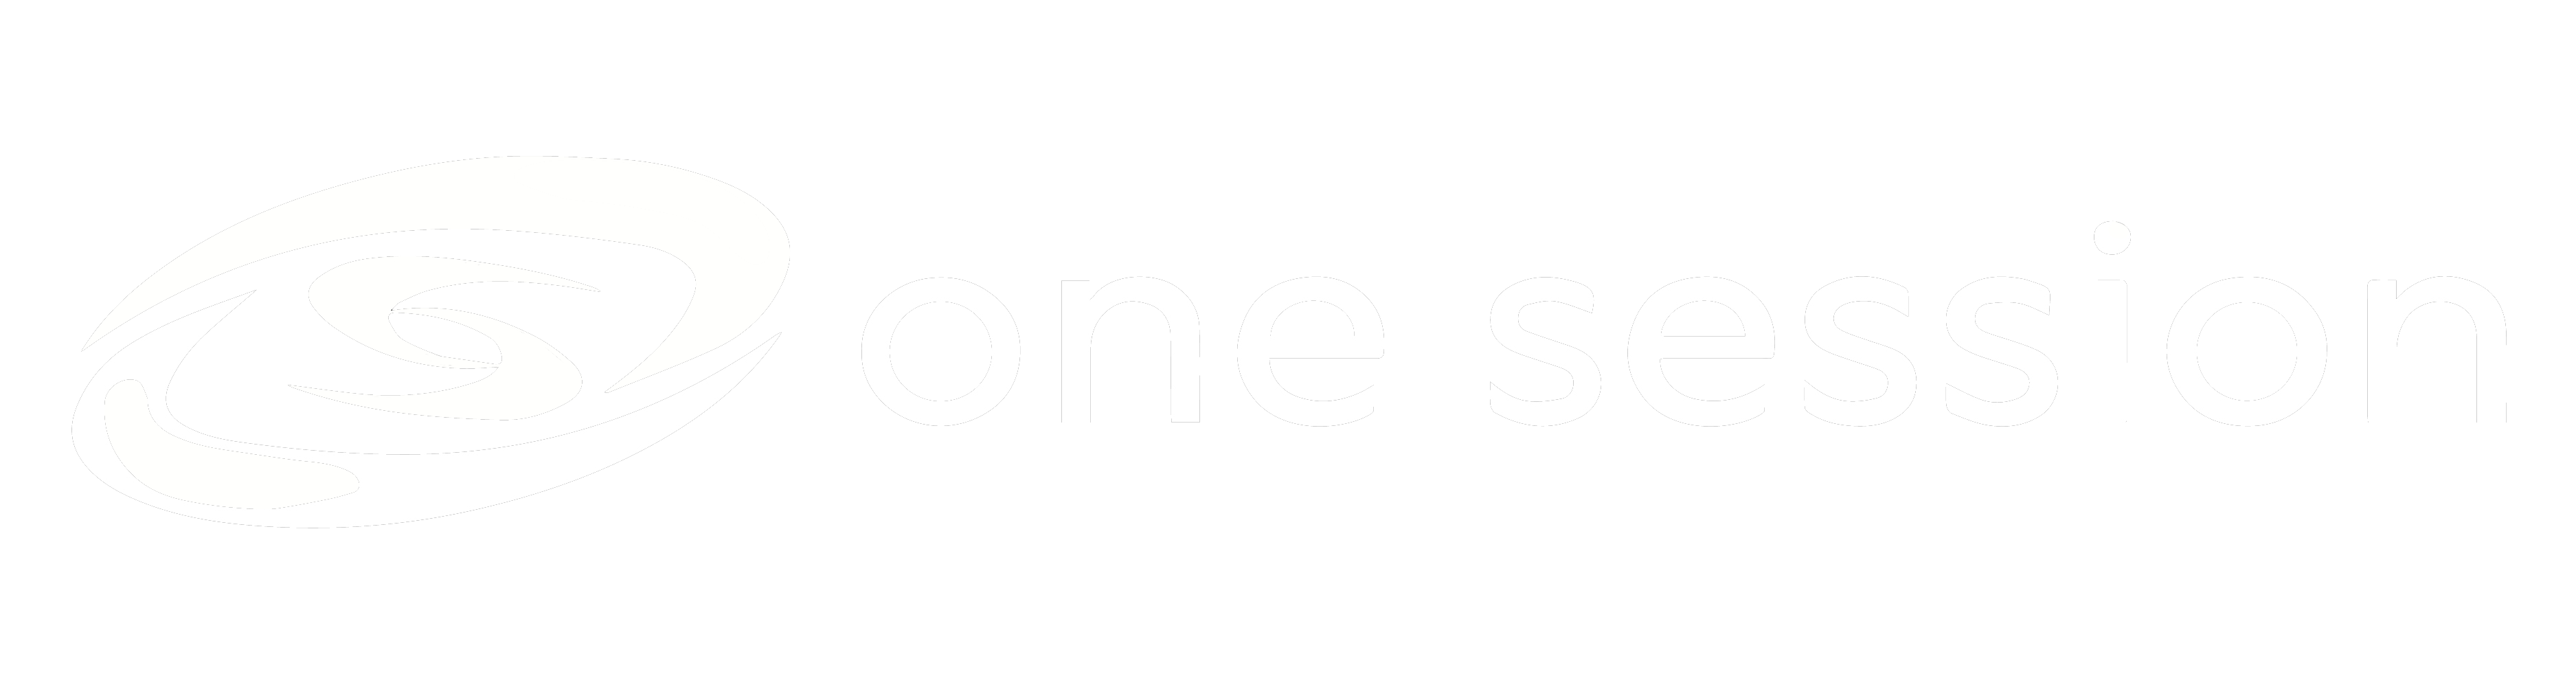 one Session Logo W